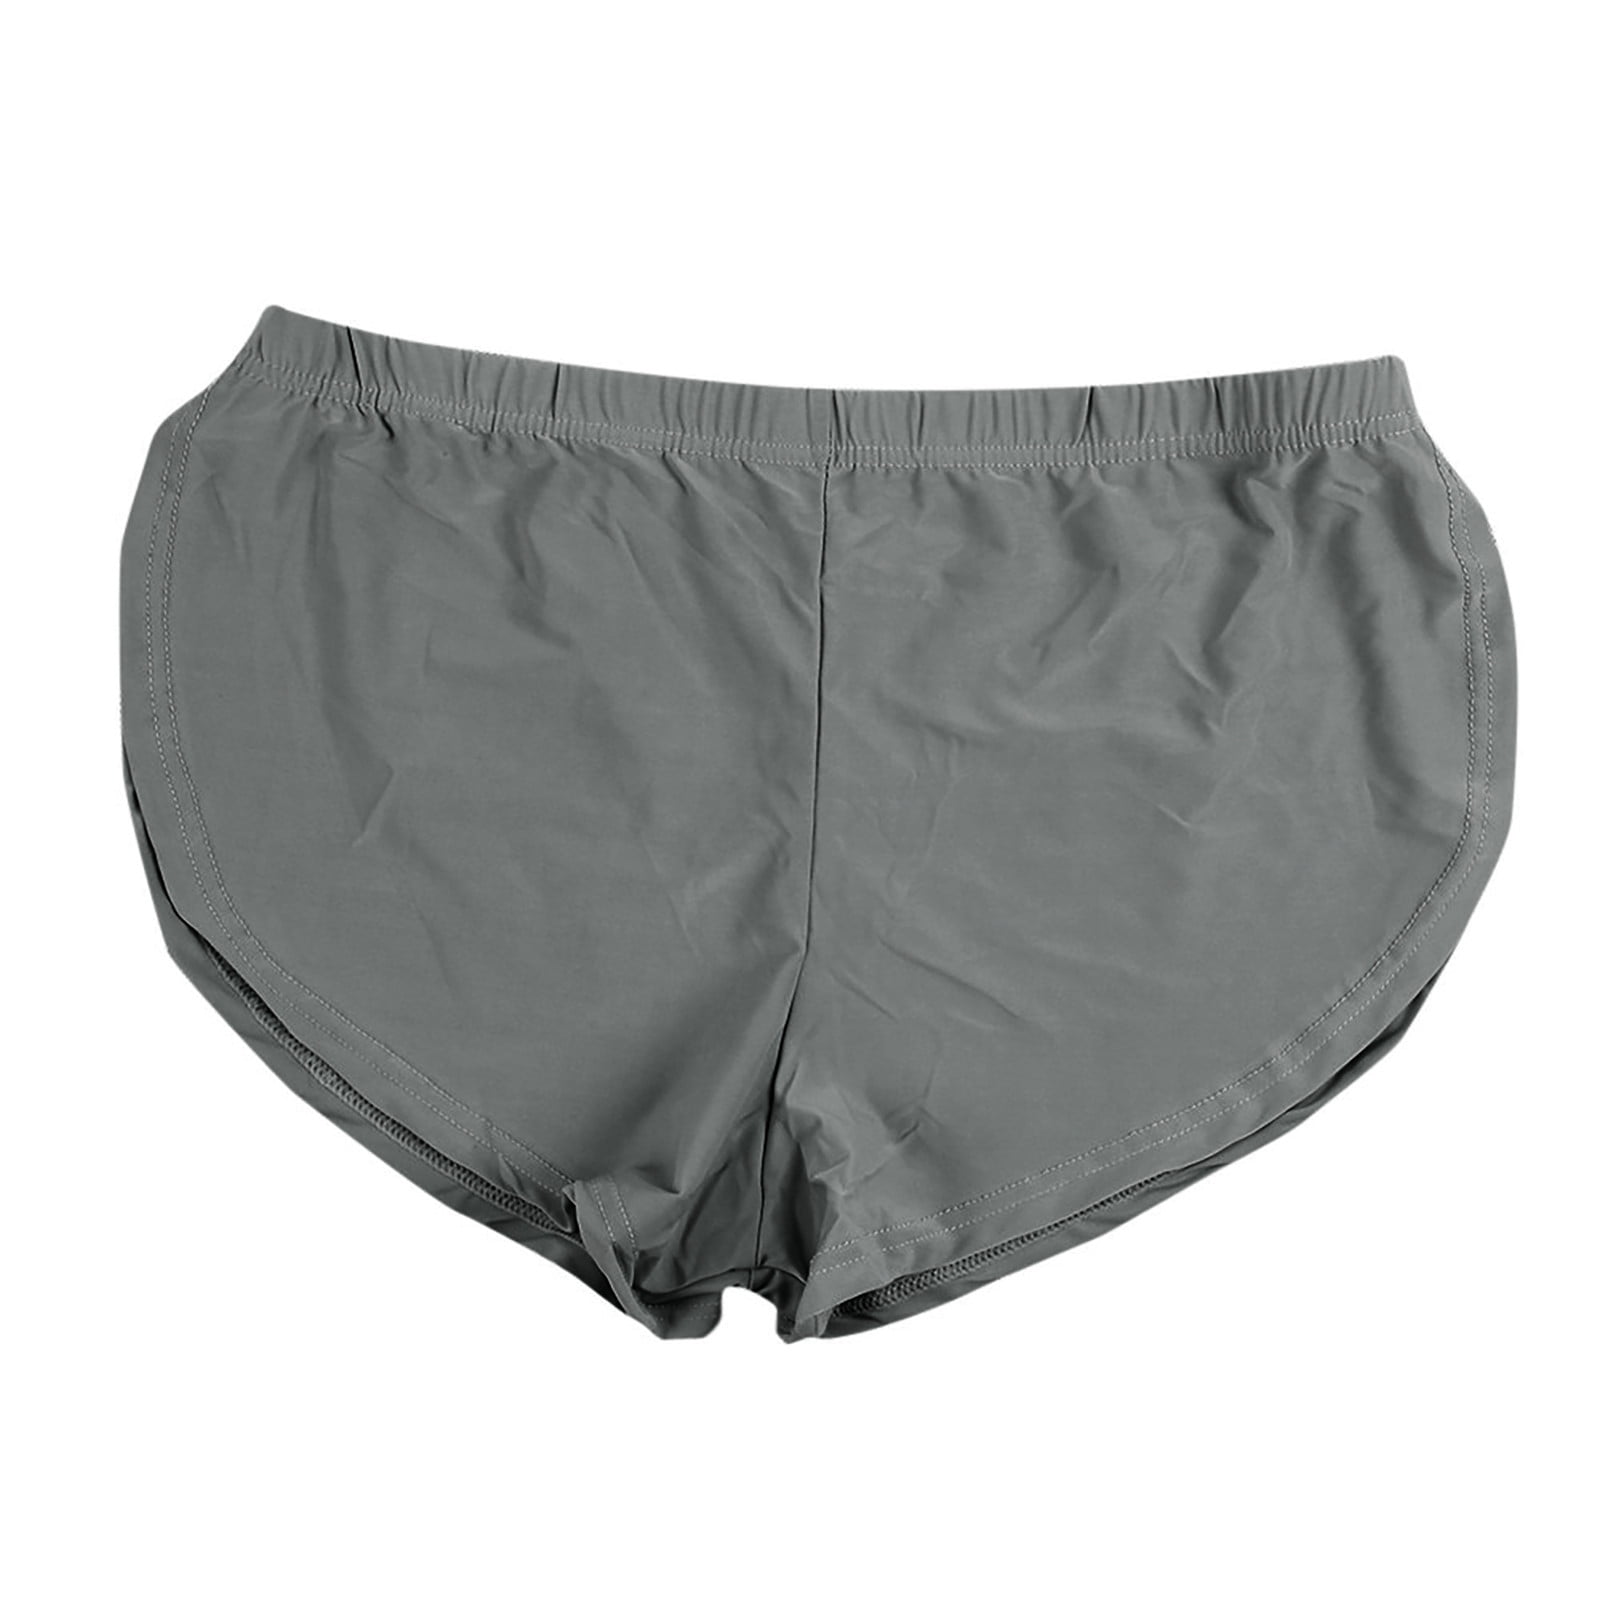 Basic gray boxers  Bodyskin – Mesbobettes